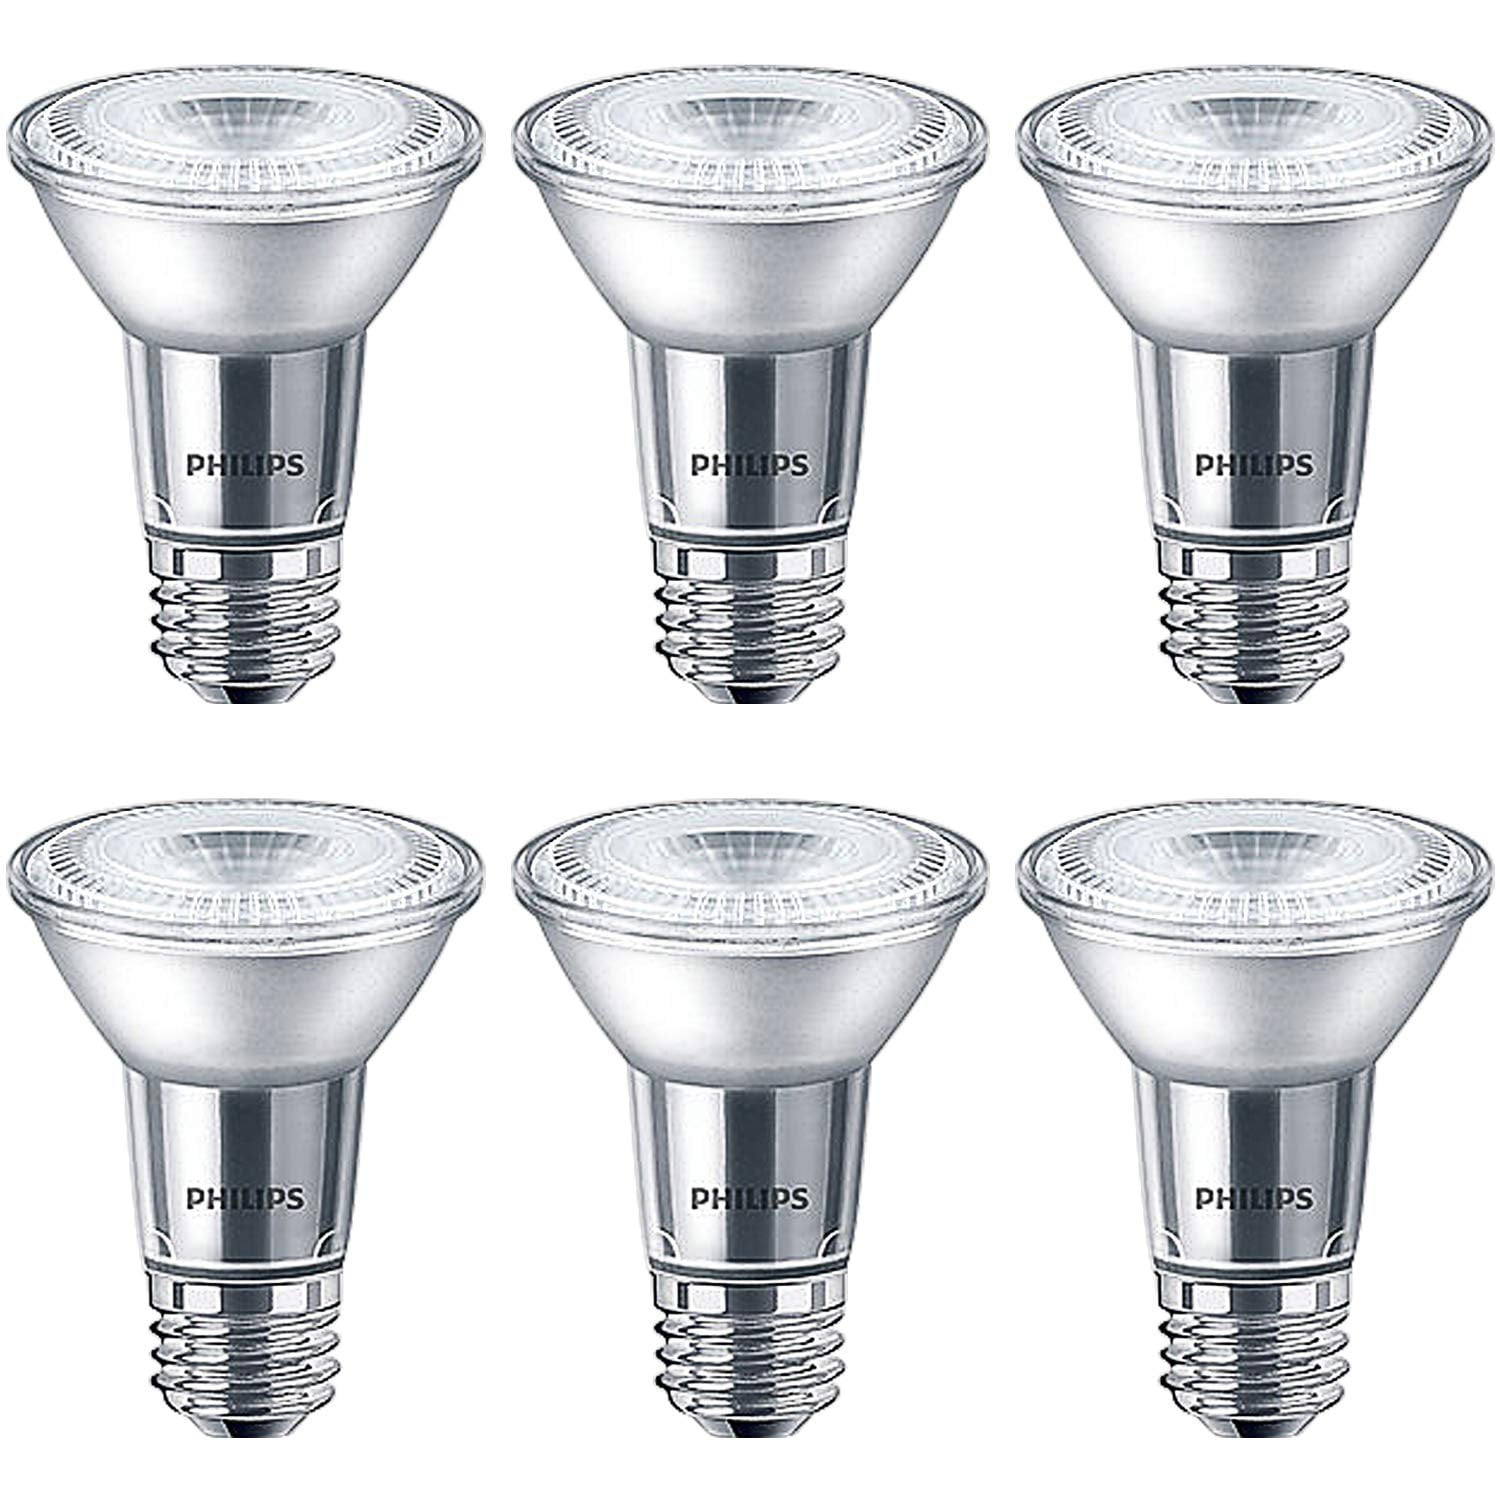 2-Pack 50W Equivalent Bright White PAR20 Dimmable LED Flood Light Bulb Ecosmart 5bHPR500STW1D18 